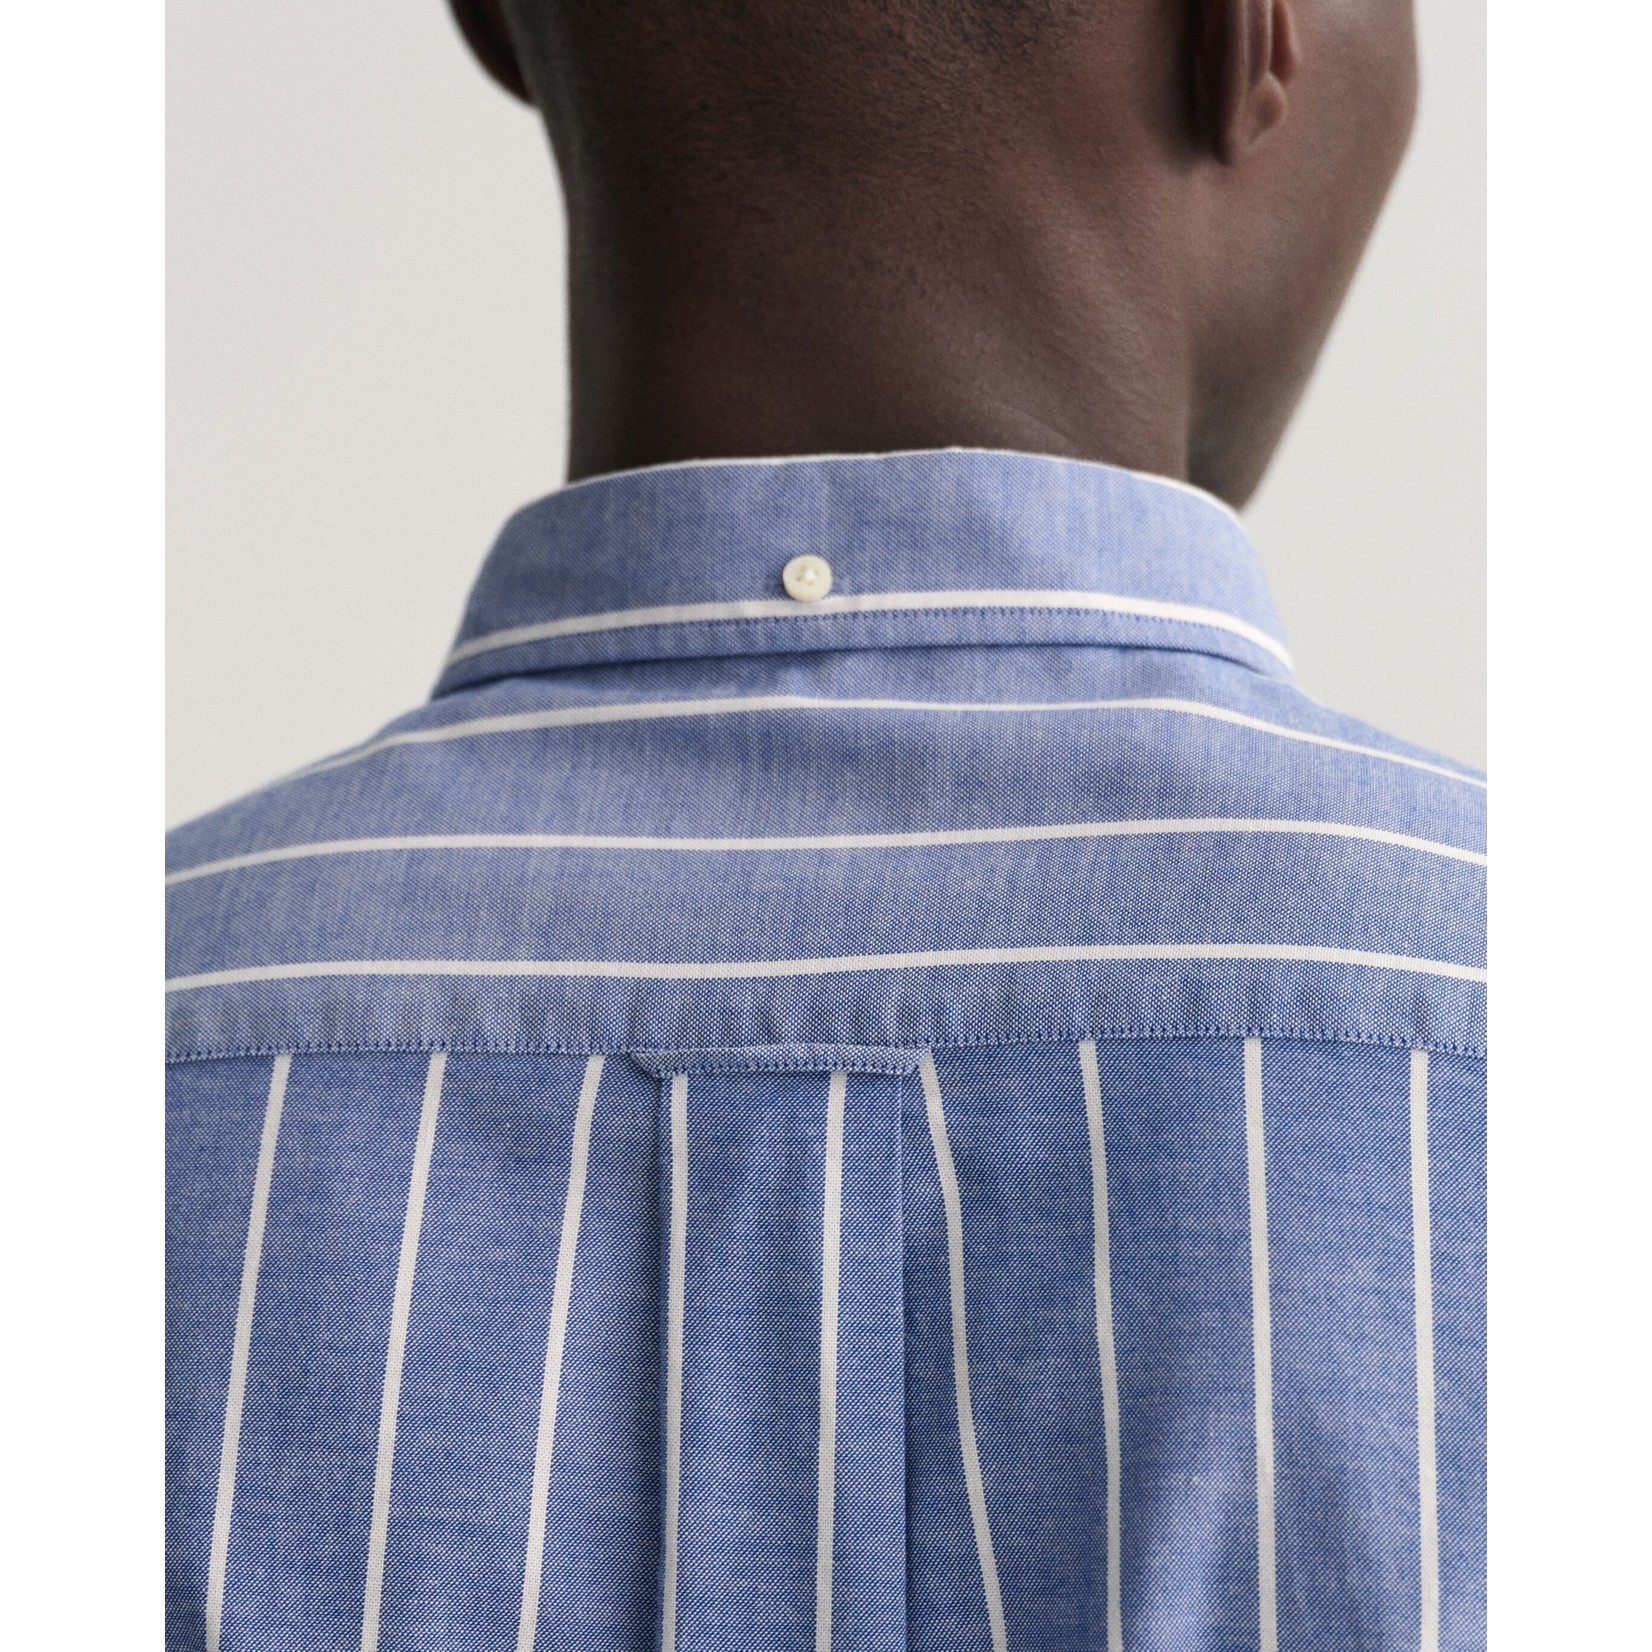 GANT regular fit Oxford overhemd blauw streep